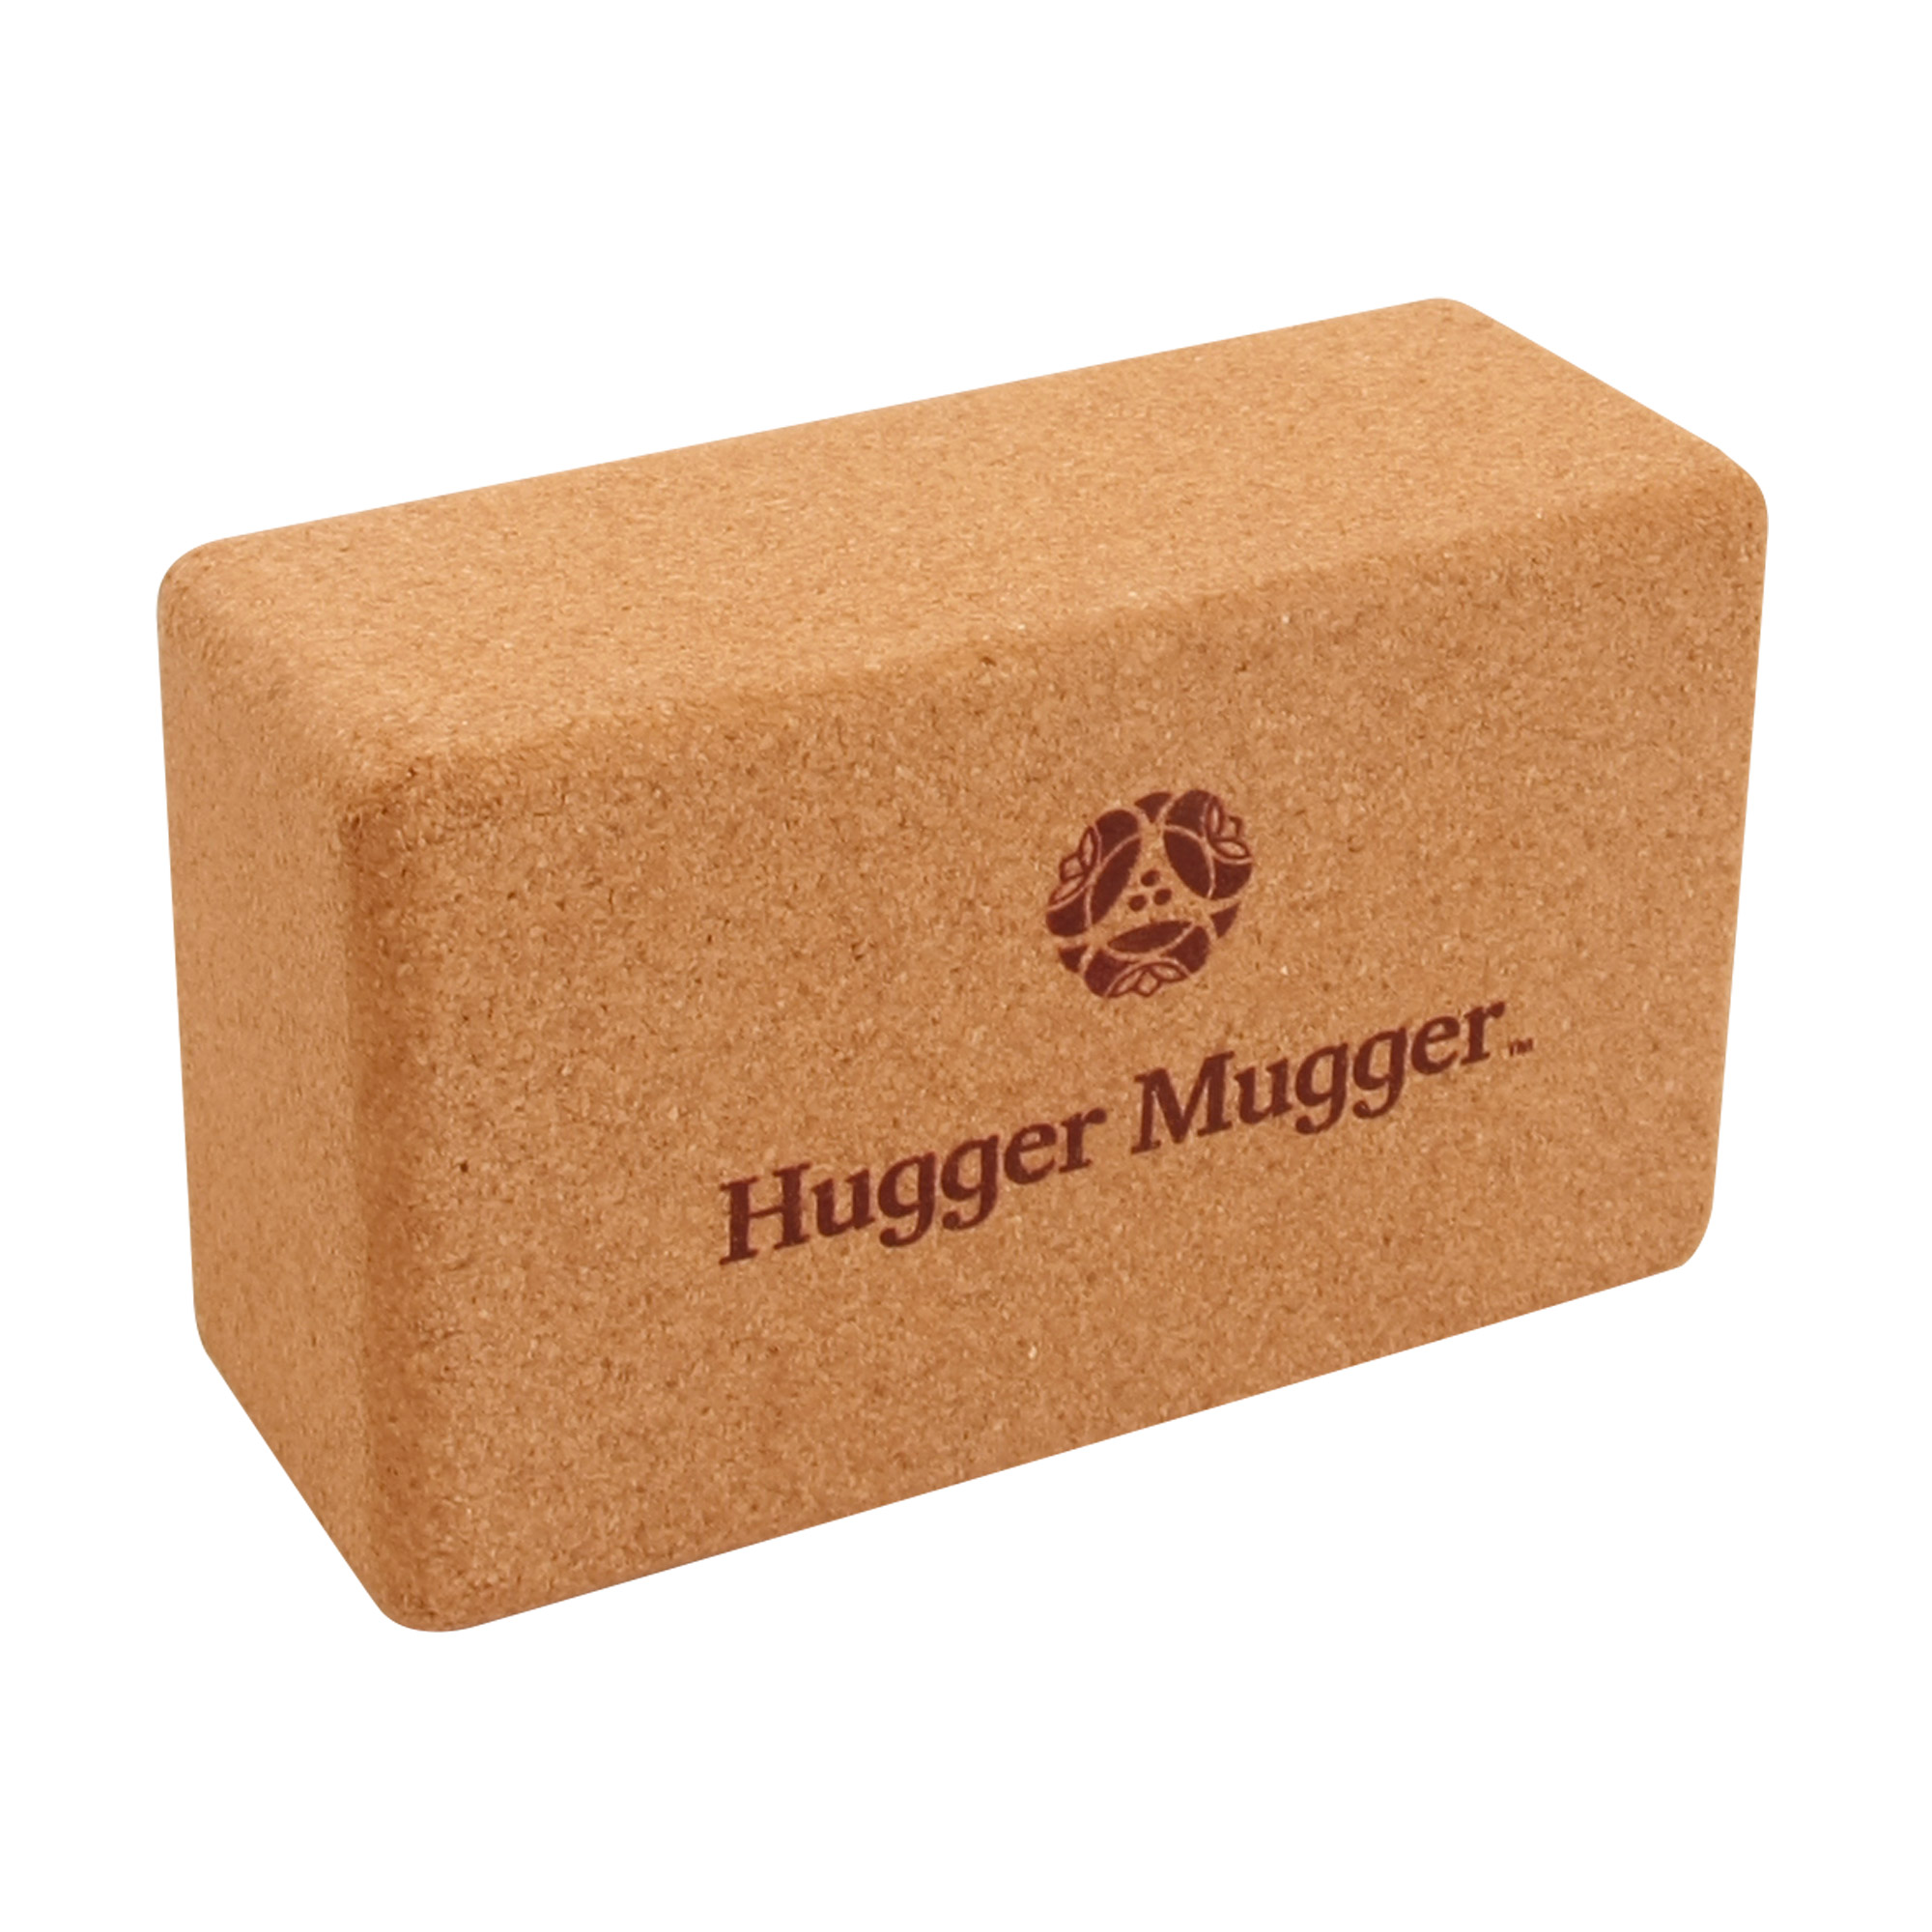 Hugger Mugger Cork Yoga Block - image 1 of 5